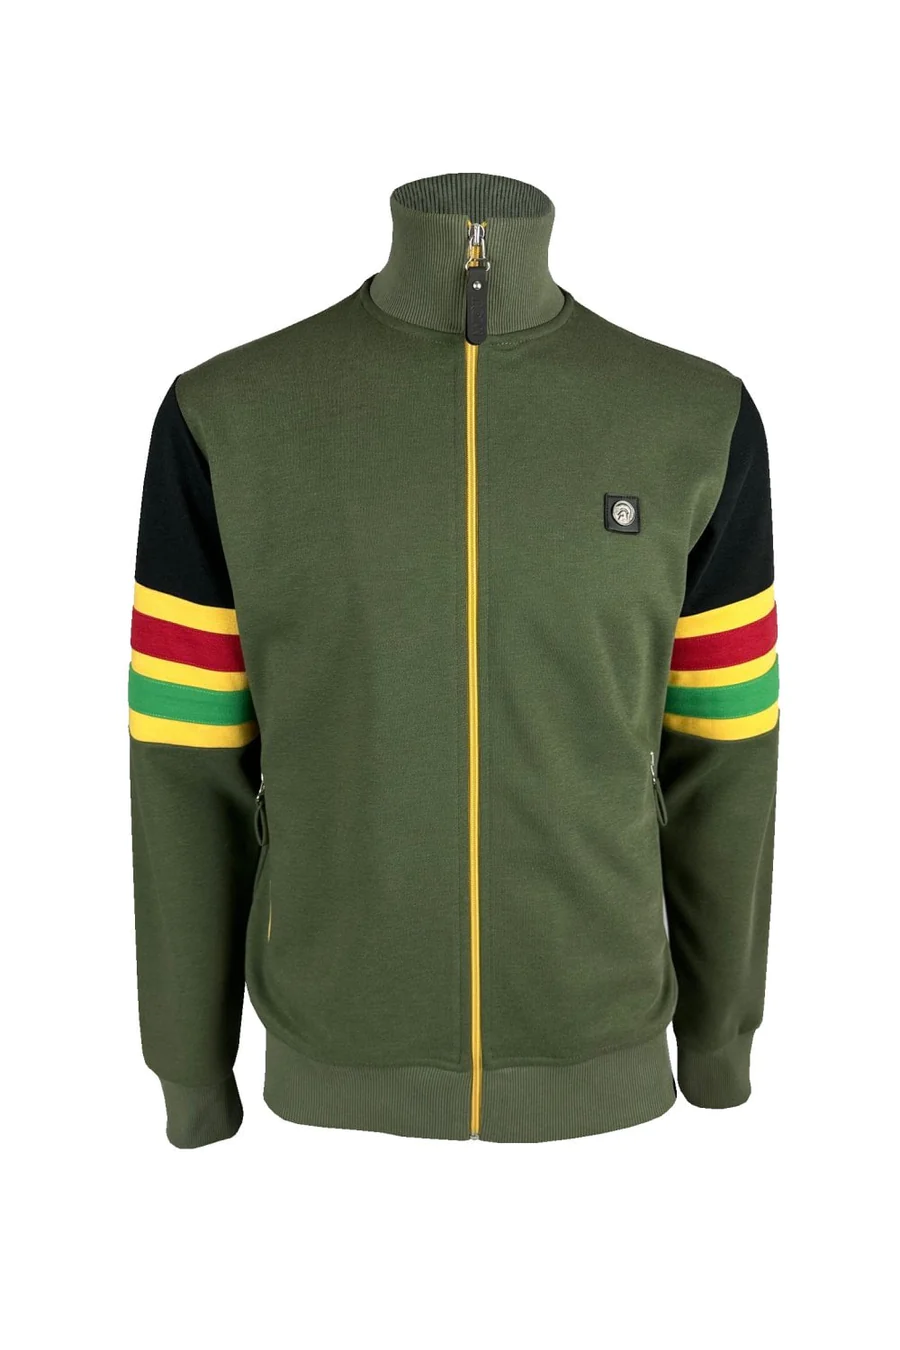 Trojan Marley Stripe Sleeve Track Top Jacket